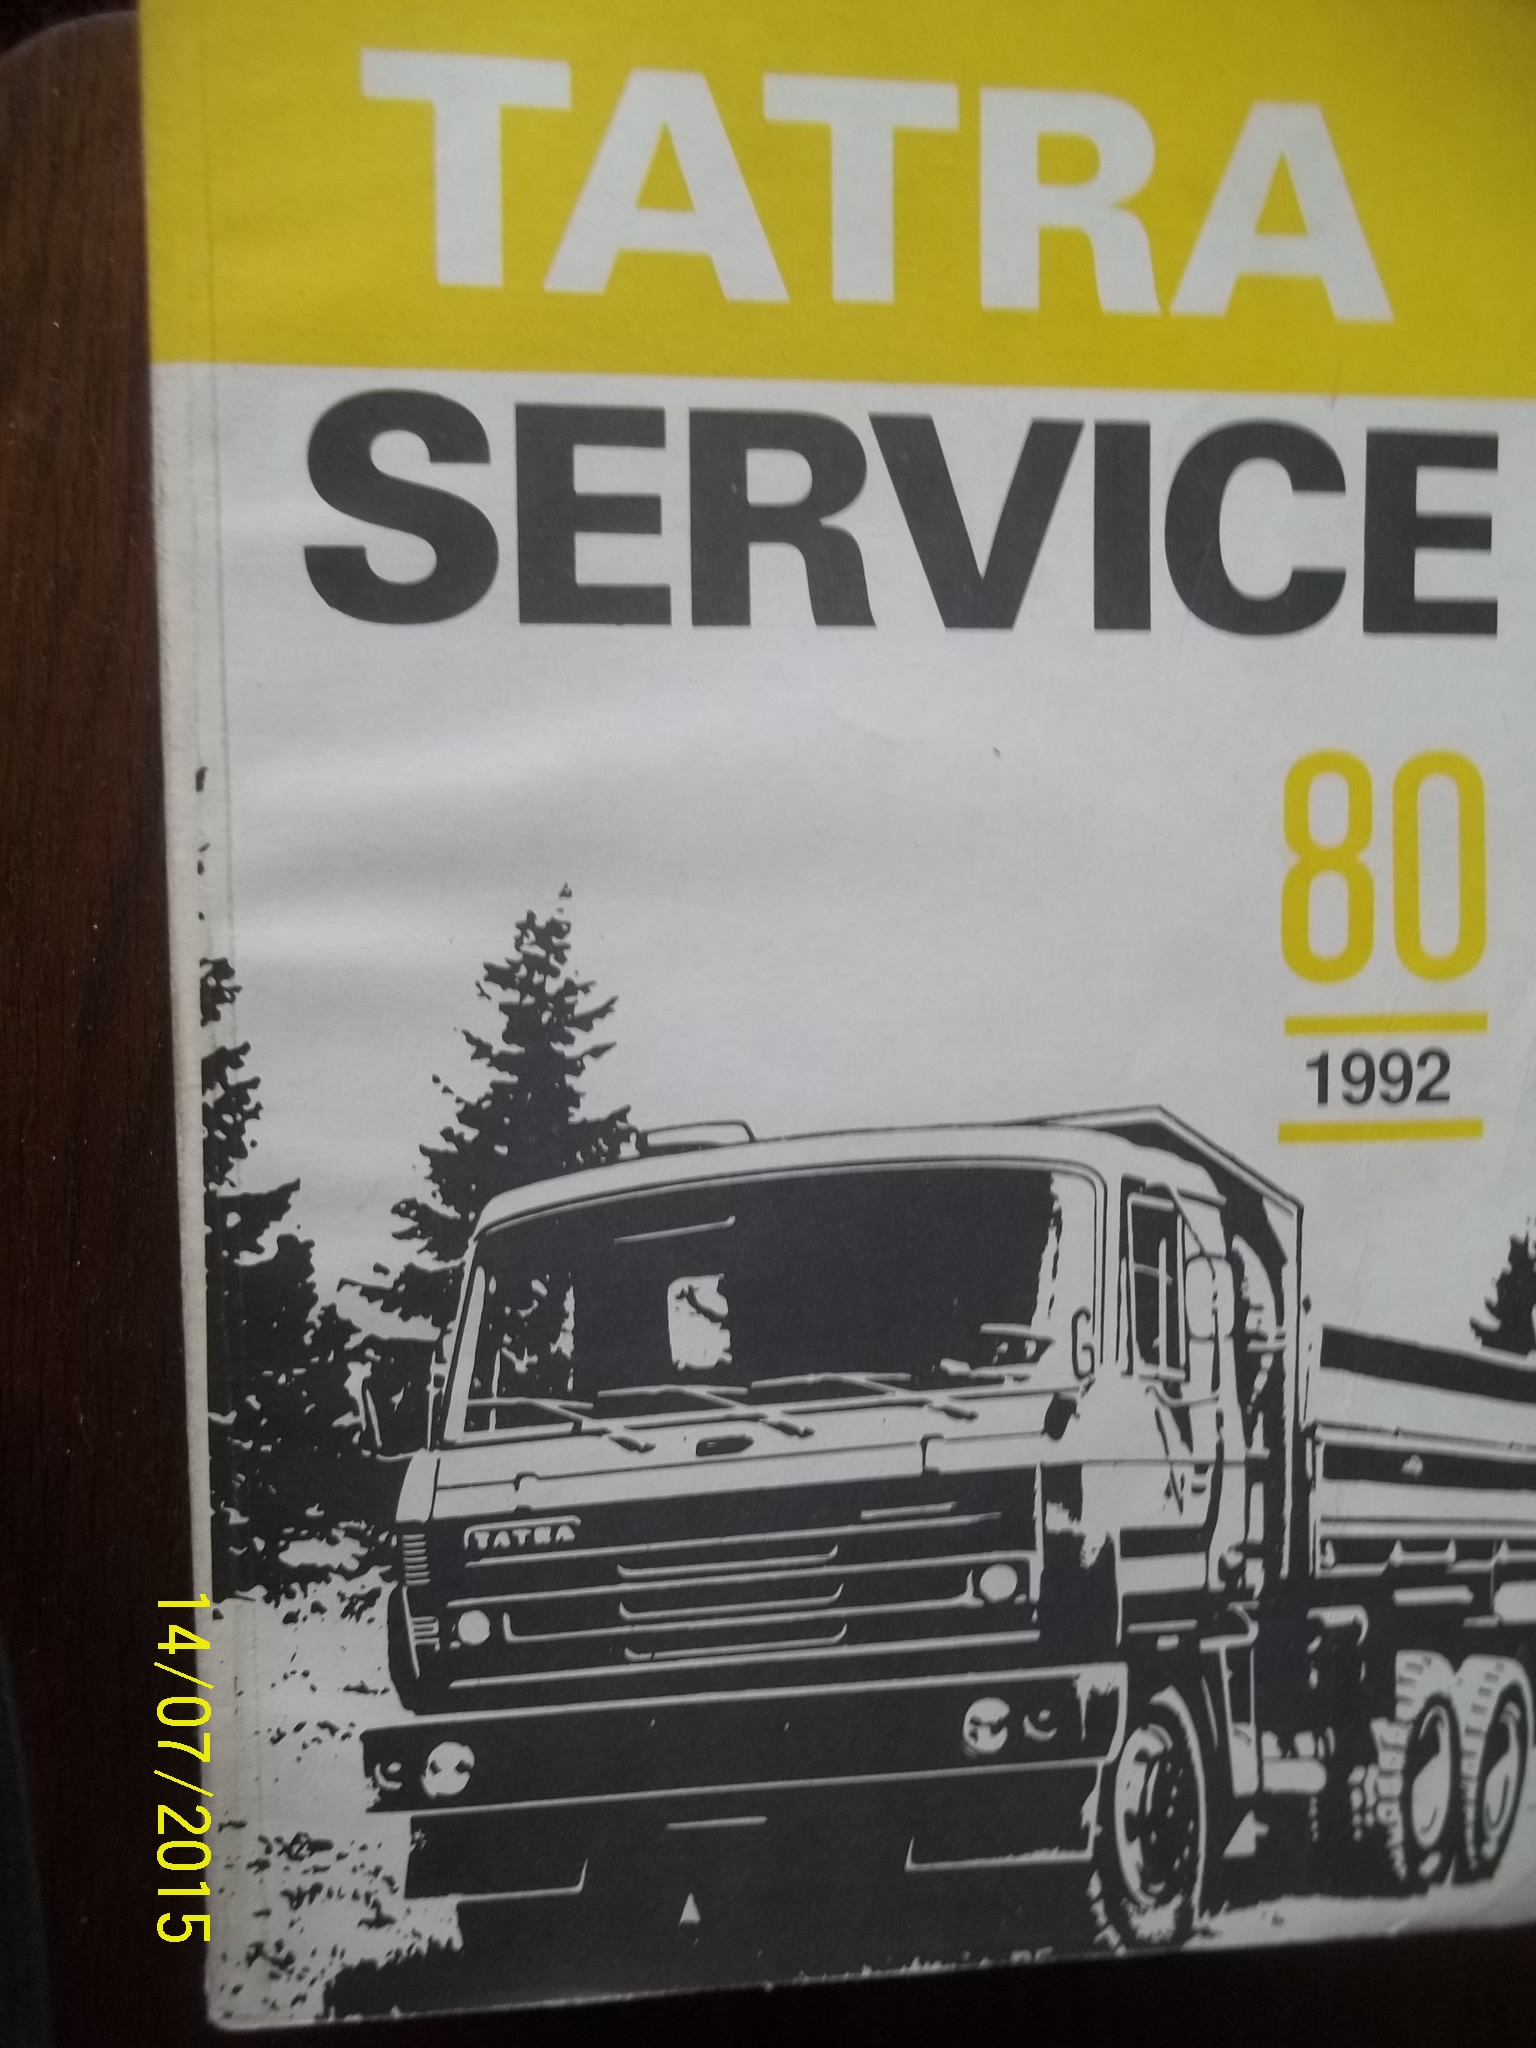 zobrazit detail knihy Tatra service 80 1992 